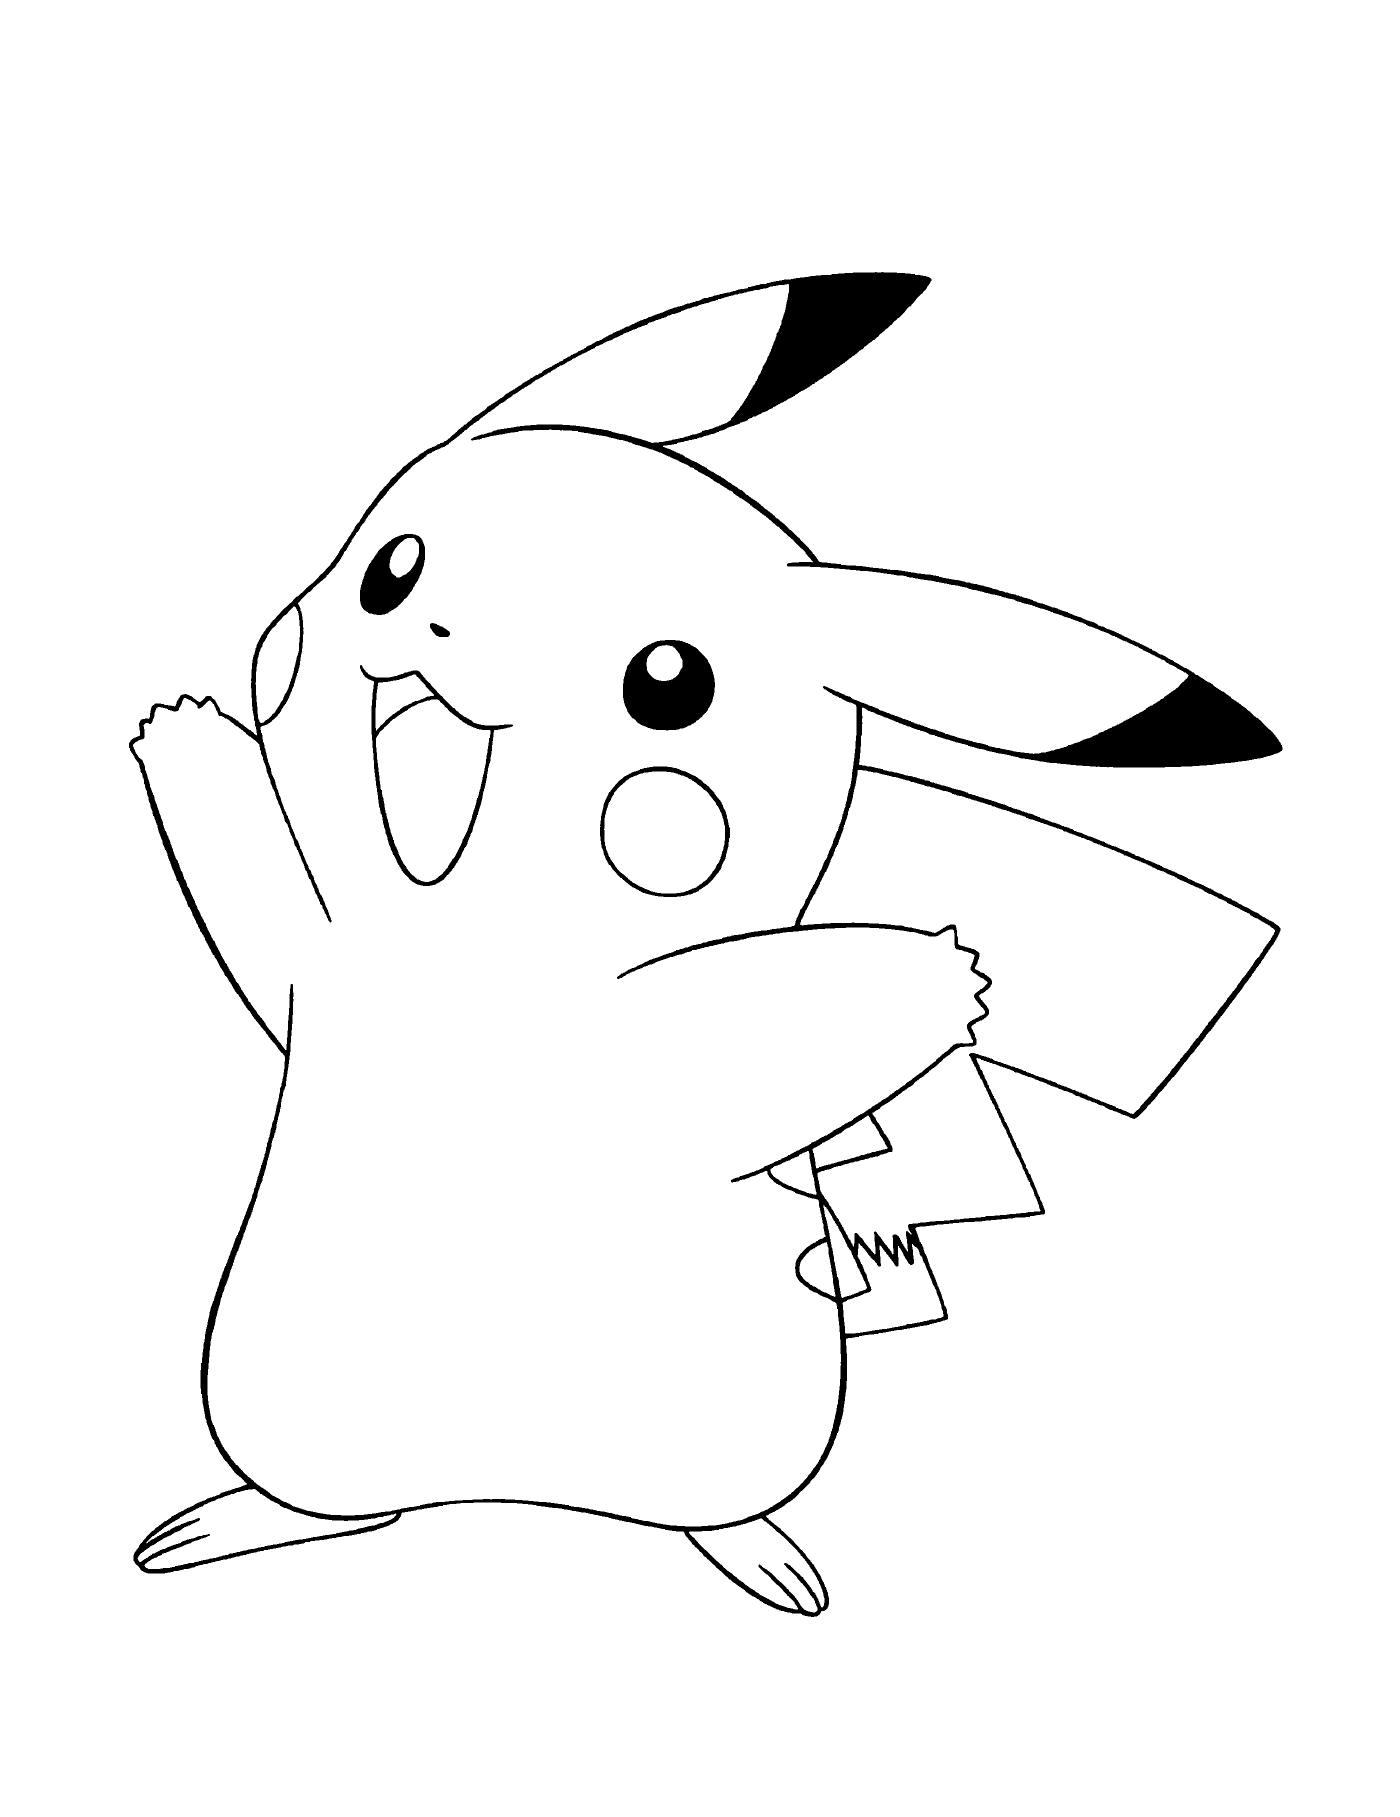  Pikachu, emblemático y cariñoso 